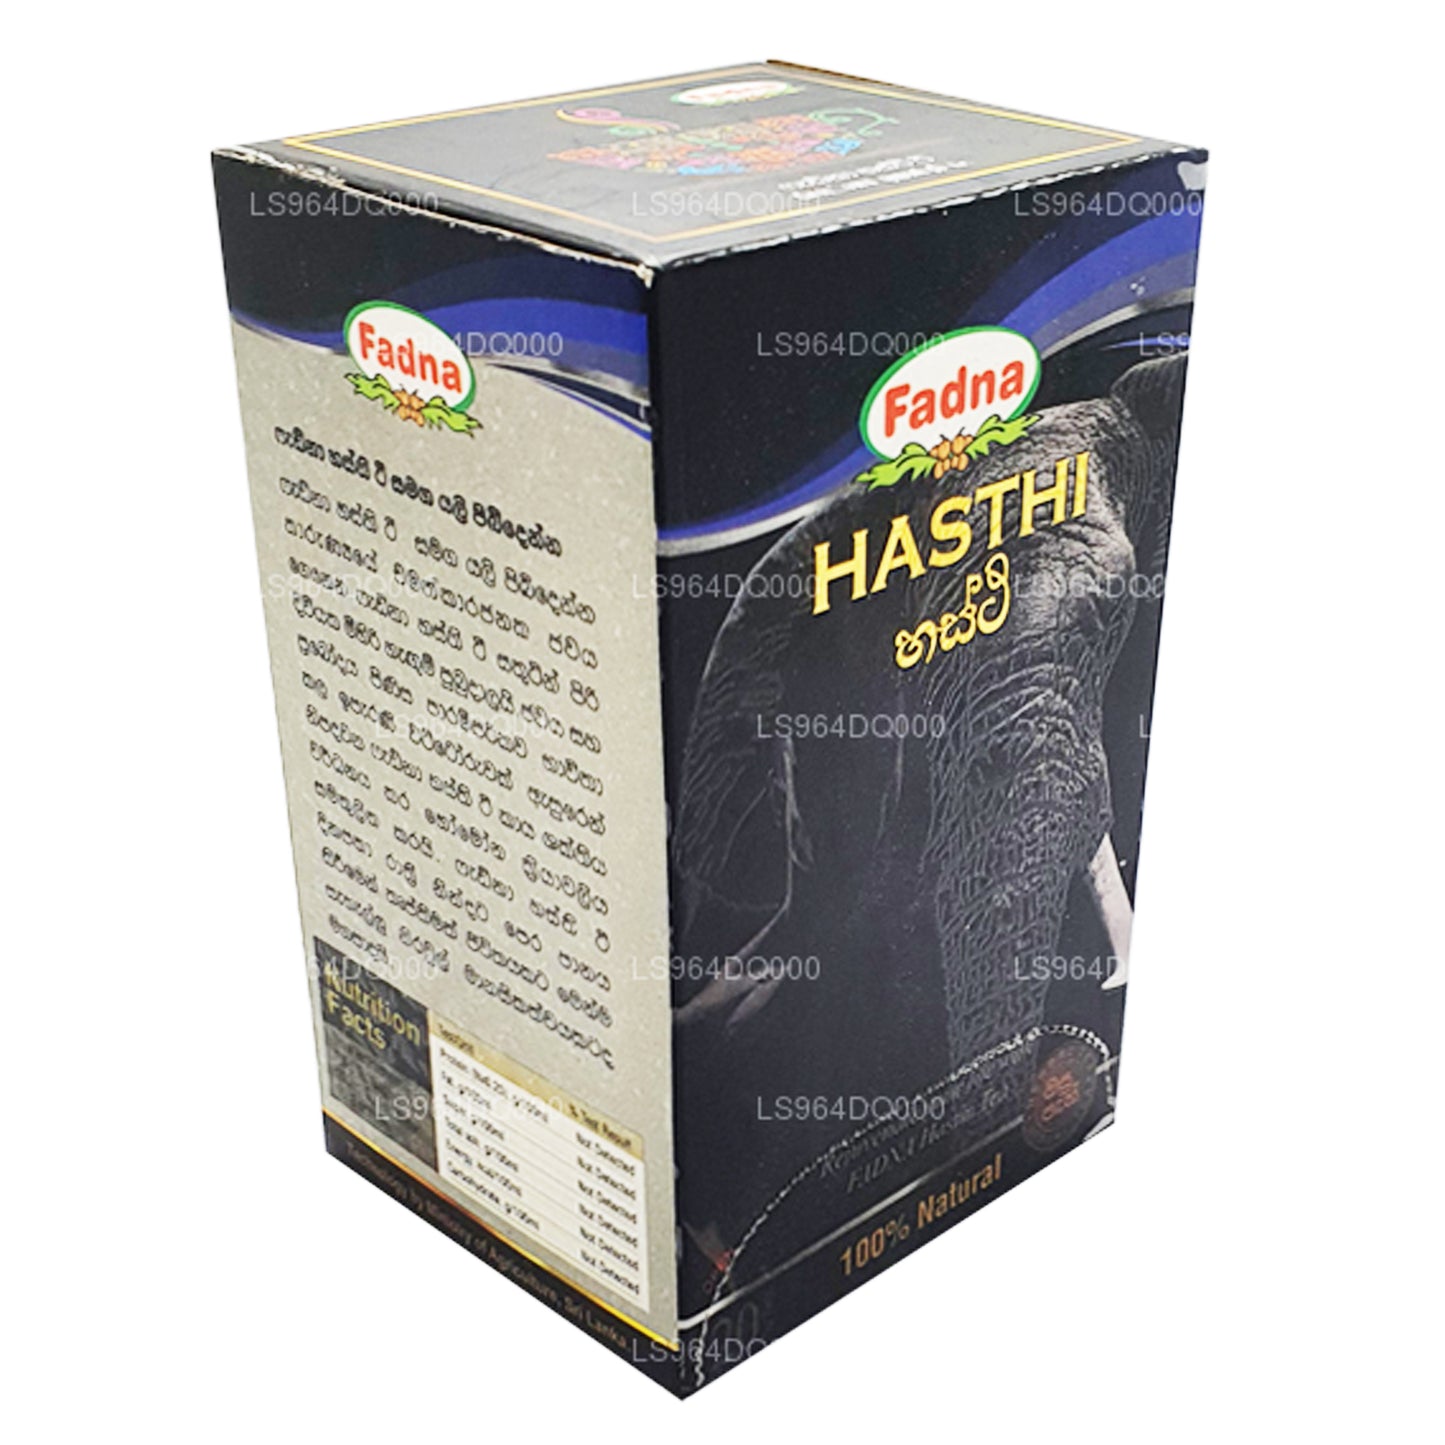 Fadna Hasthi 草本茶 (40g) 20 个茶包